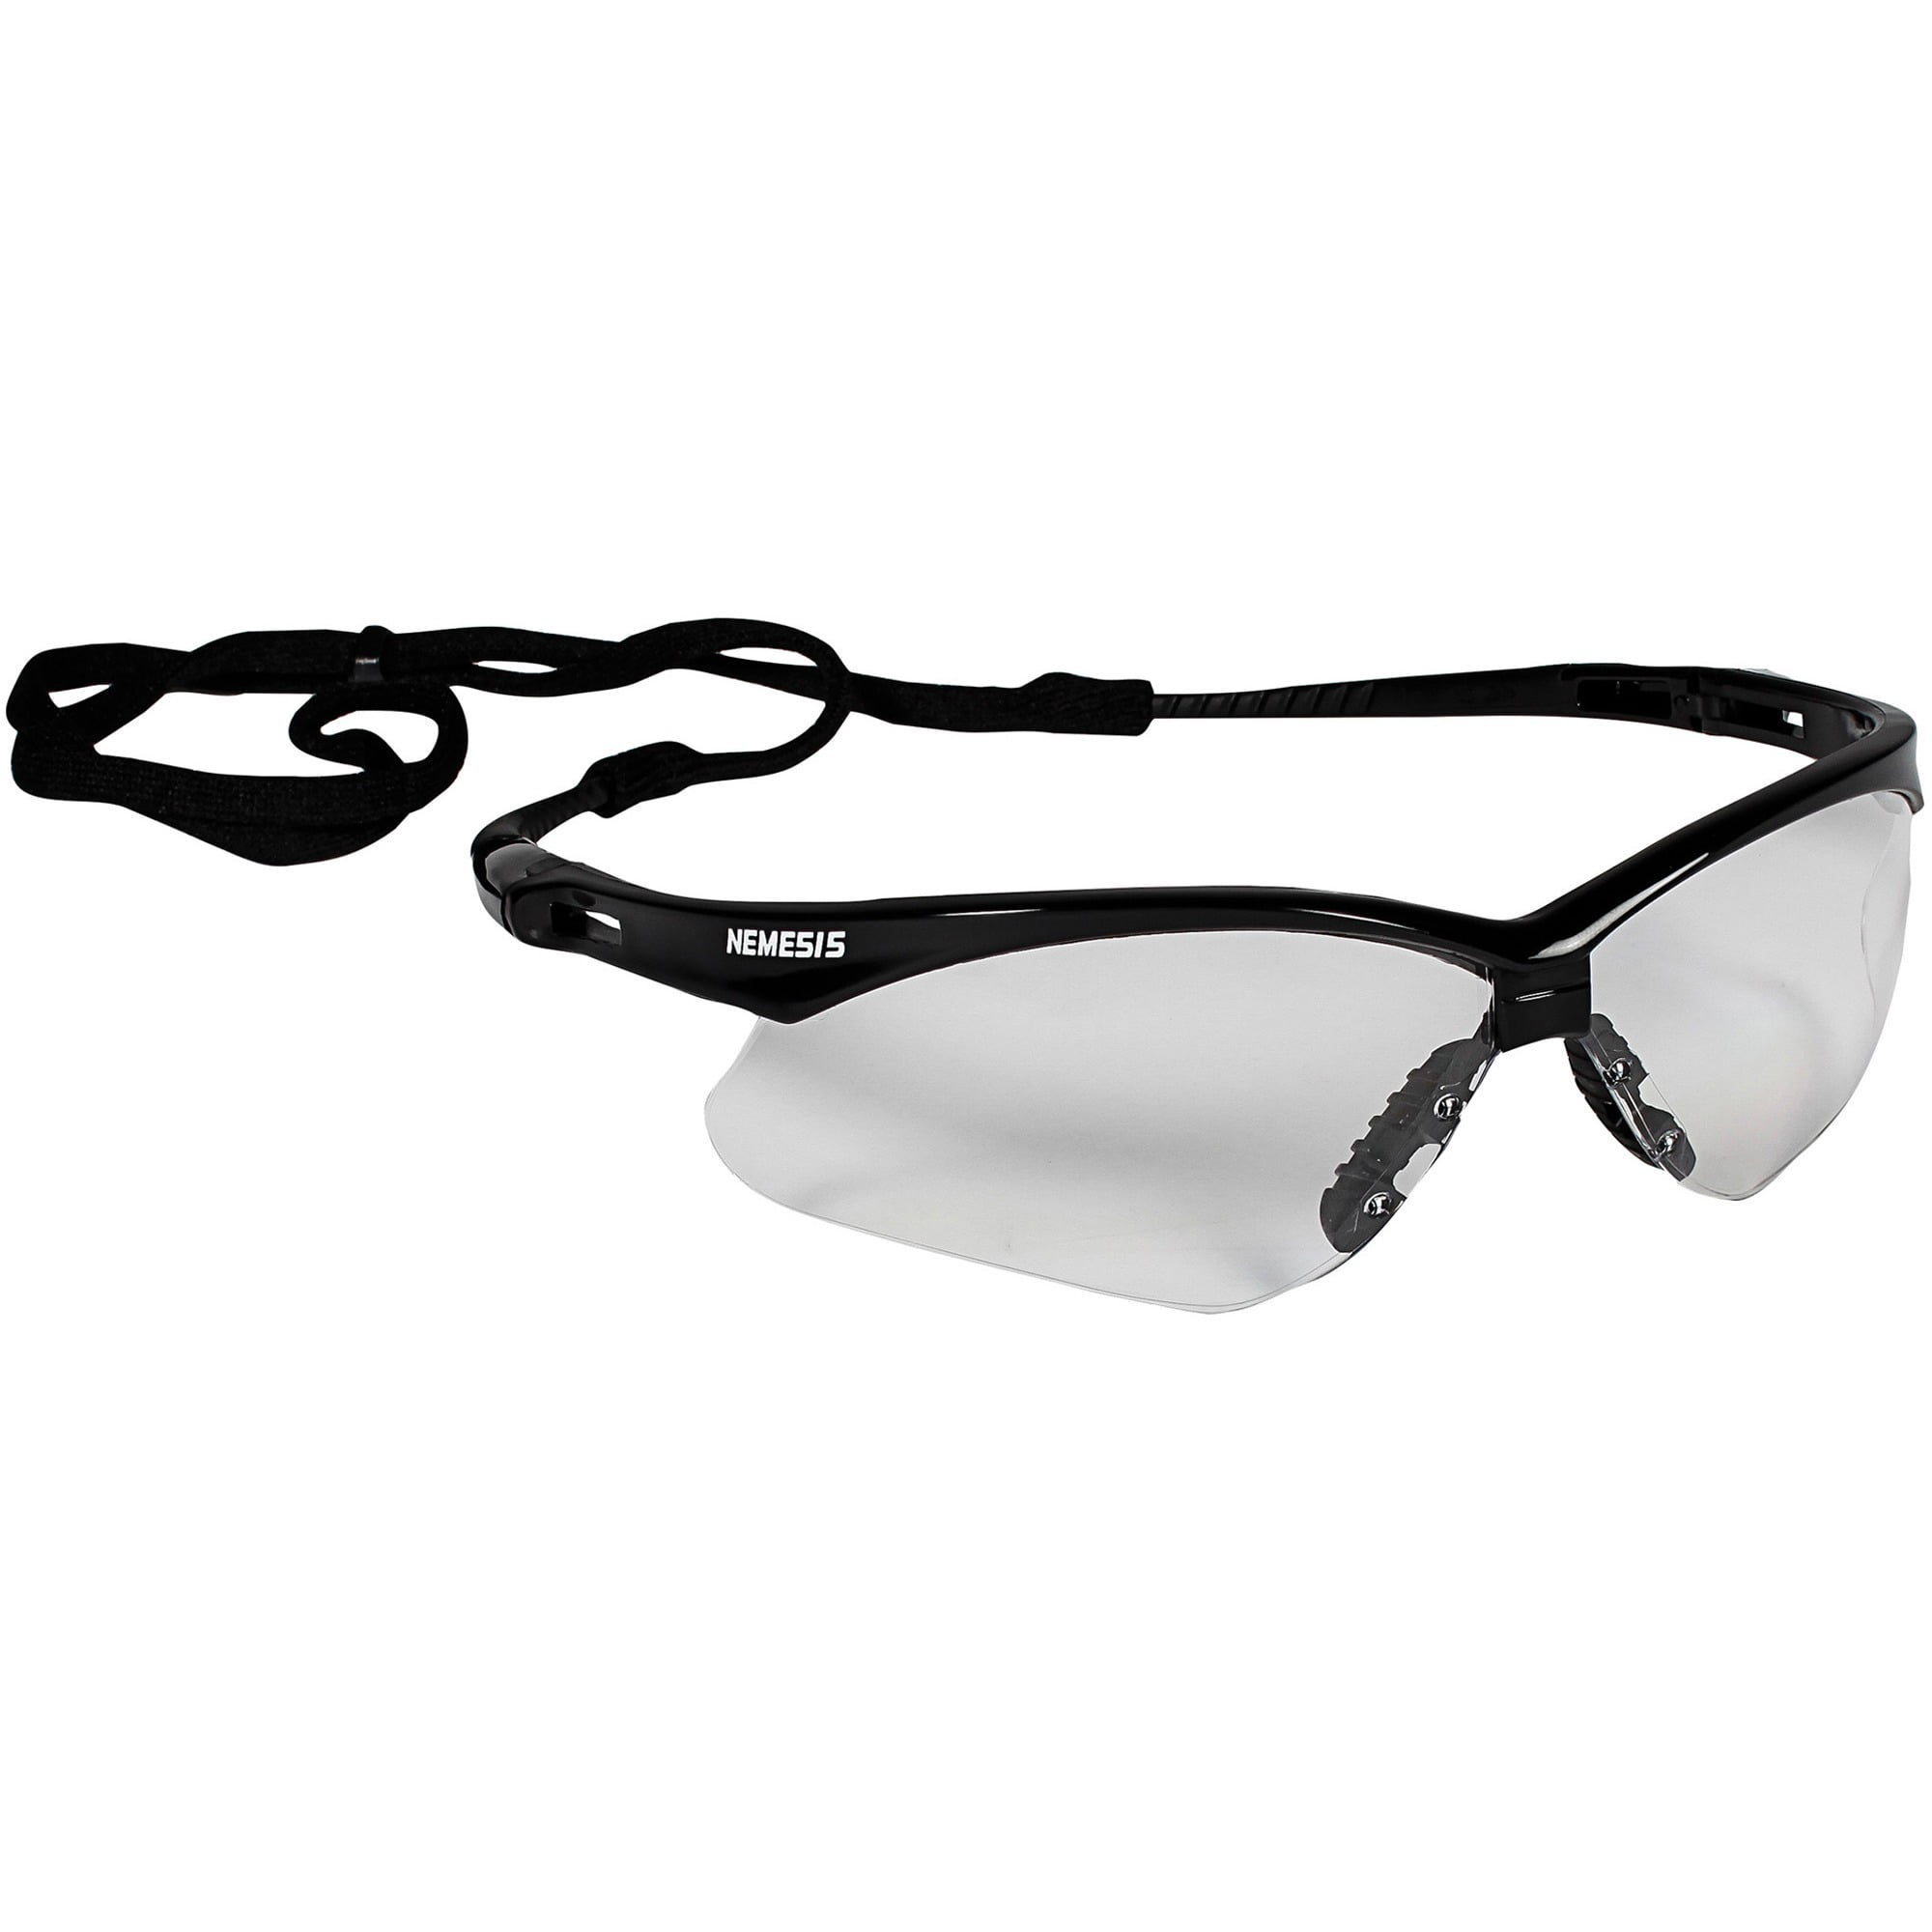 3 Three Pairs Jackson 25692 V30 Nemesis Black Frame IRUV 3.0 Lens Safety Glasses 